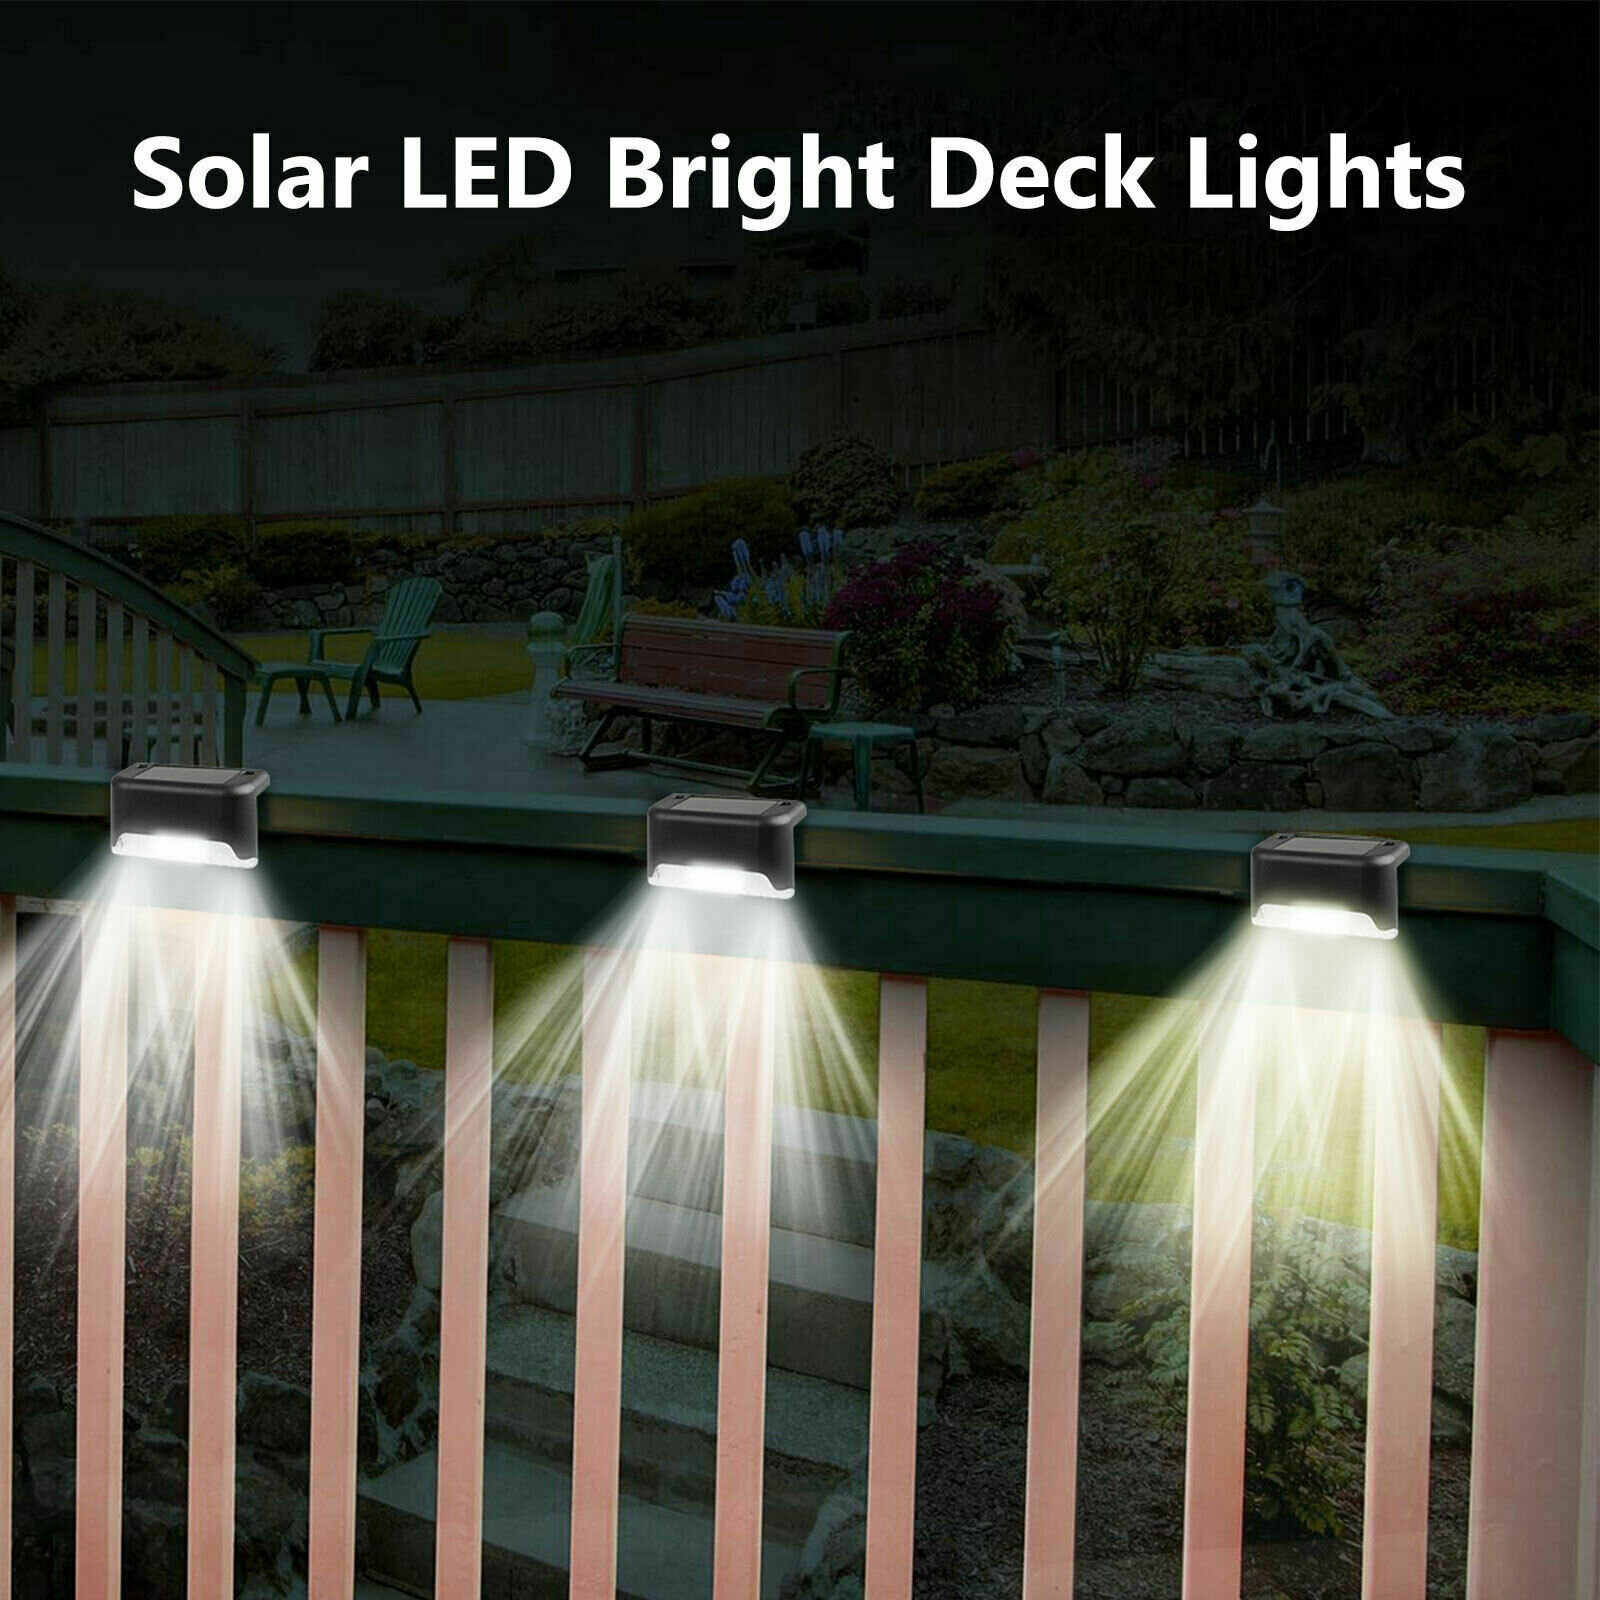 Solar LED Bright Deck Lights Outdoor Garden Patio Railing Decks Path Lighting US 